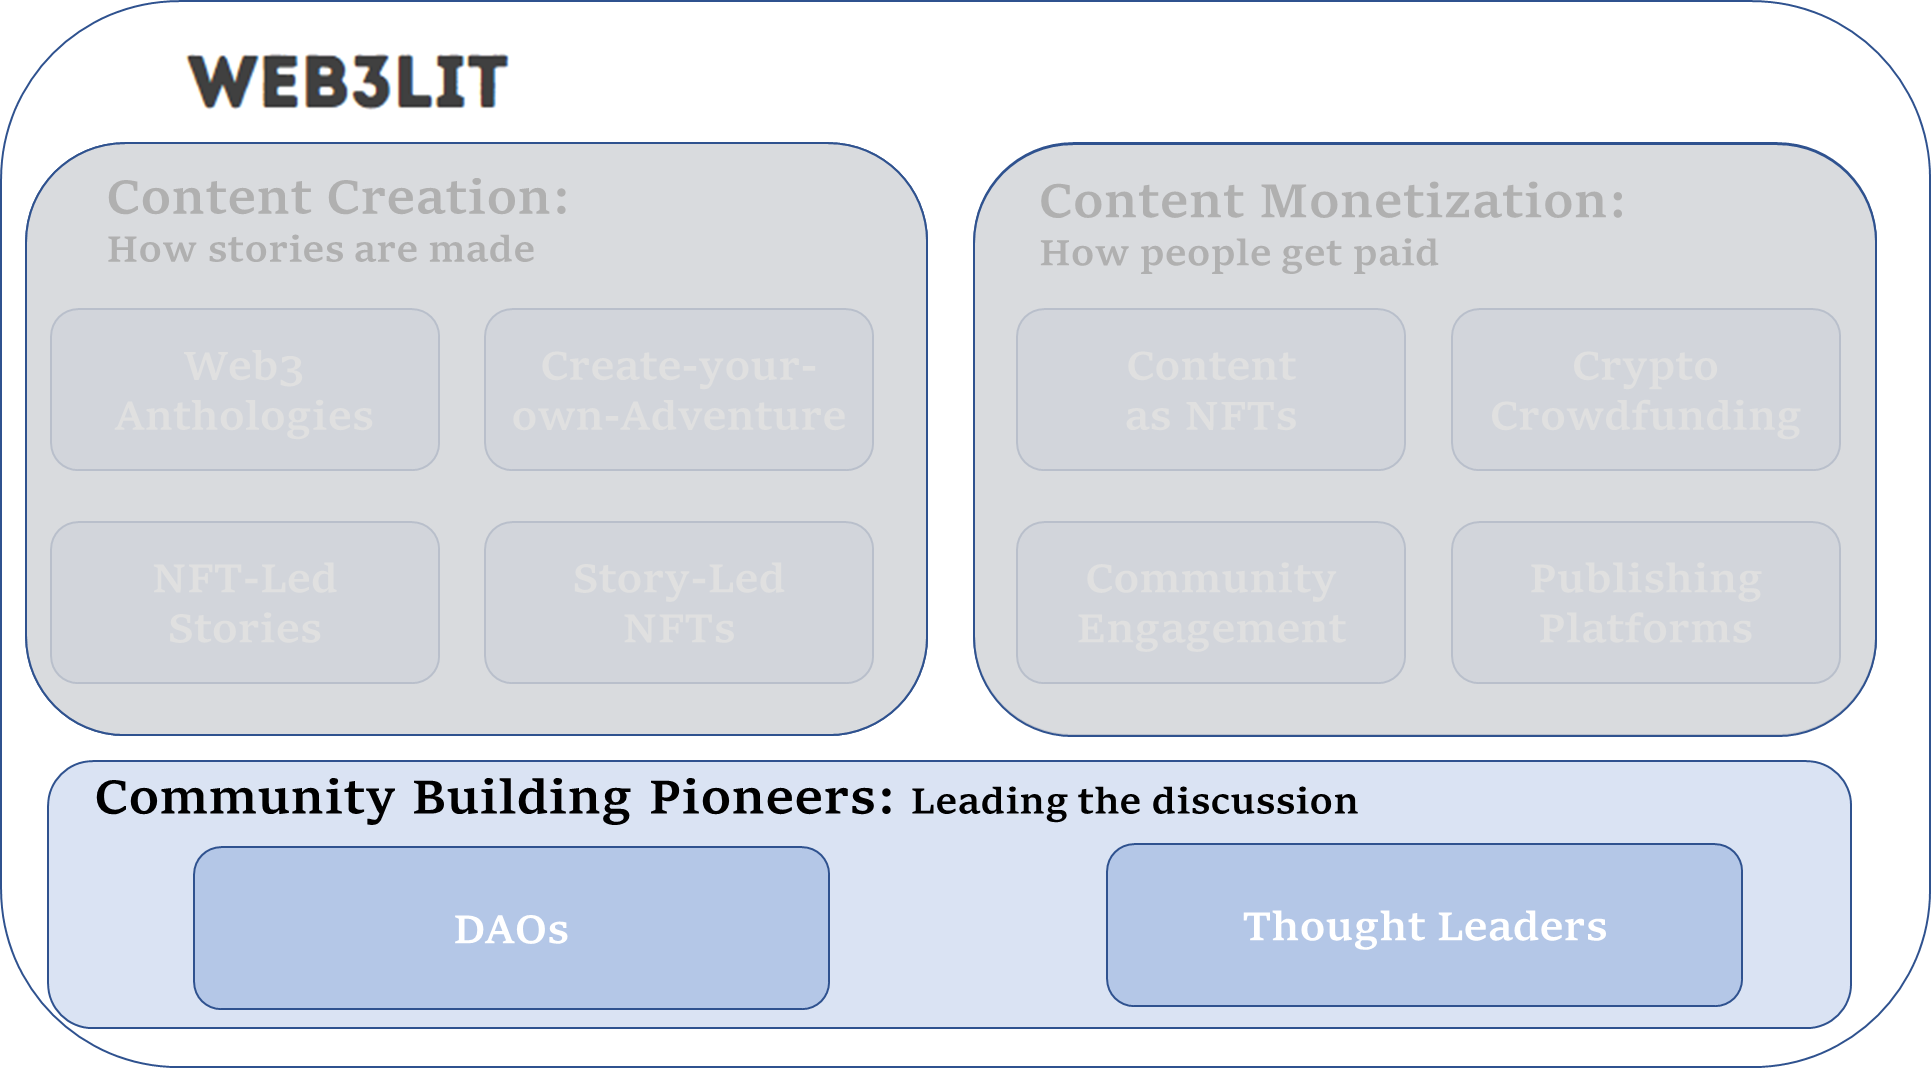 Image description: visual categories of community building pioneers in Web3Lit